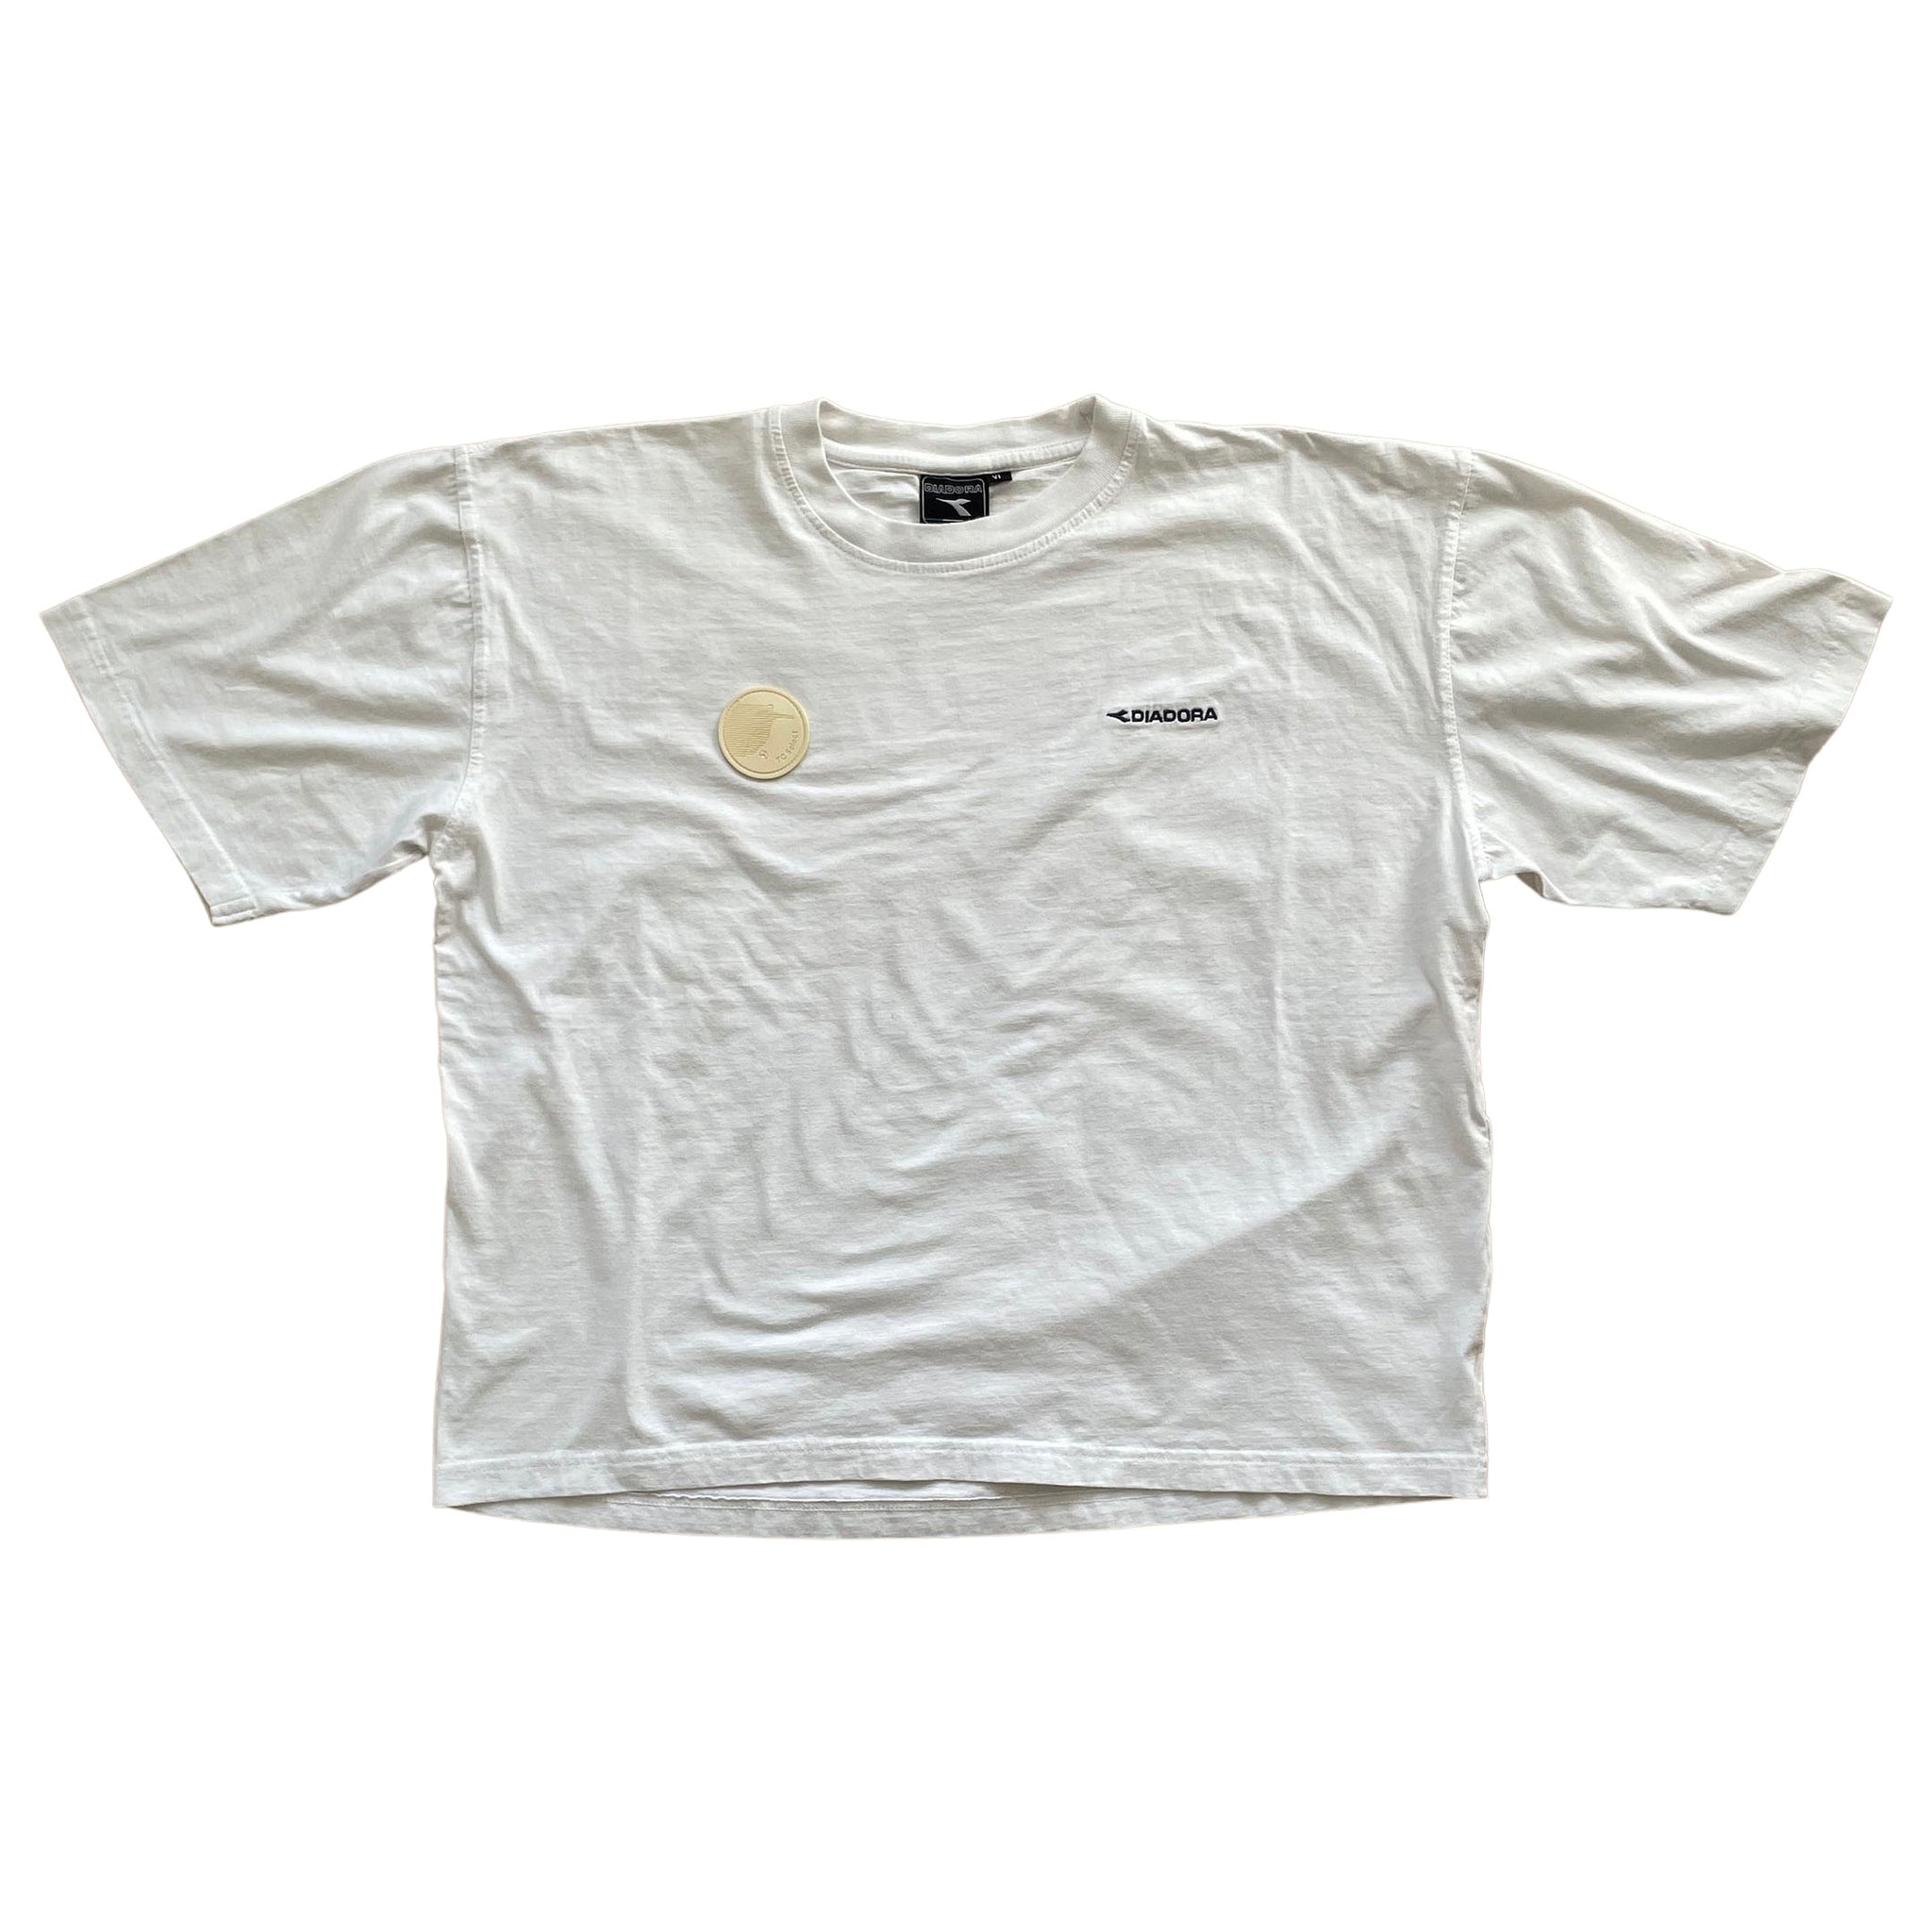 Diadora Embroidered T-Shirt - M